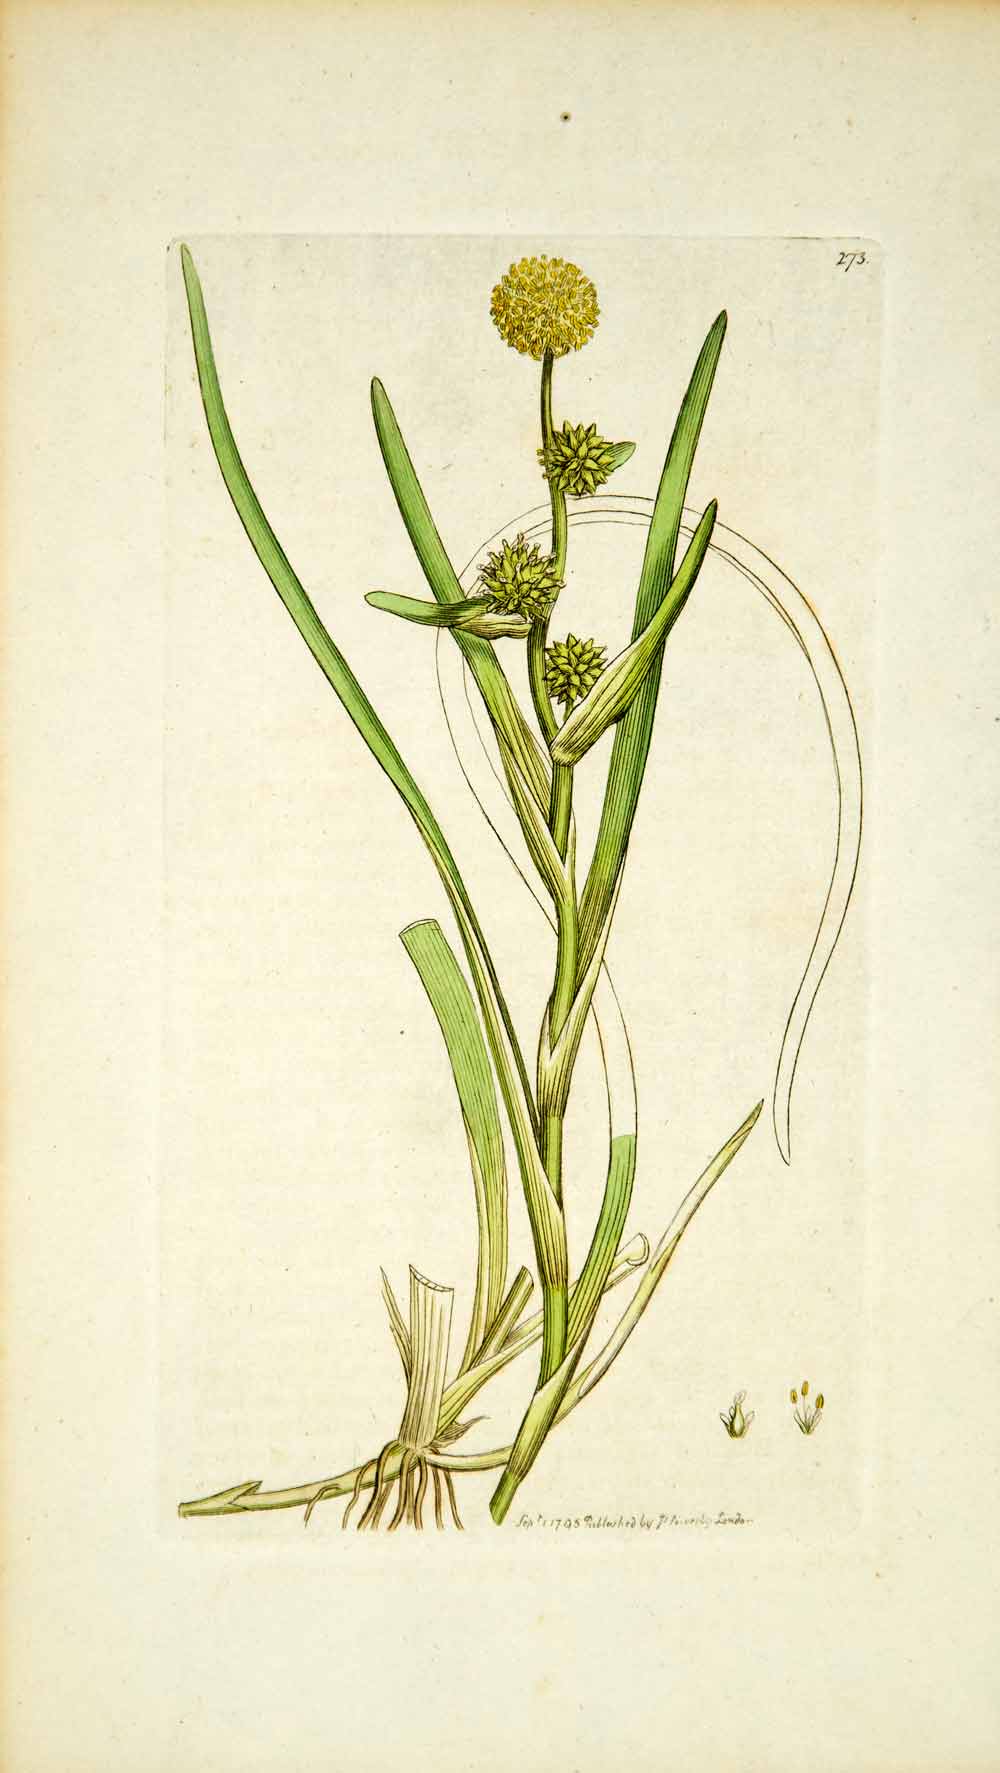 1795 Copper Engraving James Sowerby Sparganium Small Bur-Reed Botanical EB4